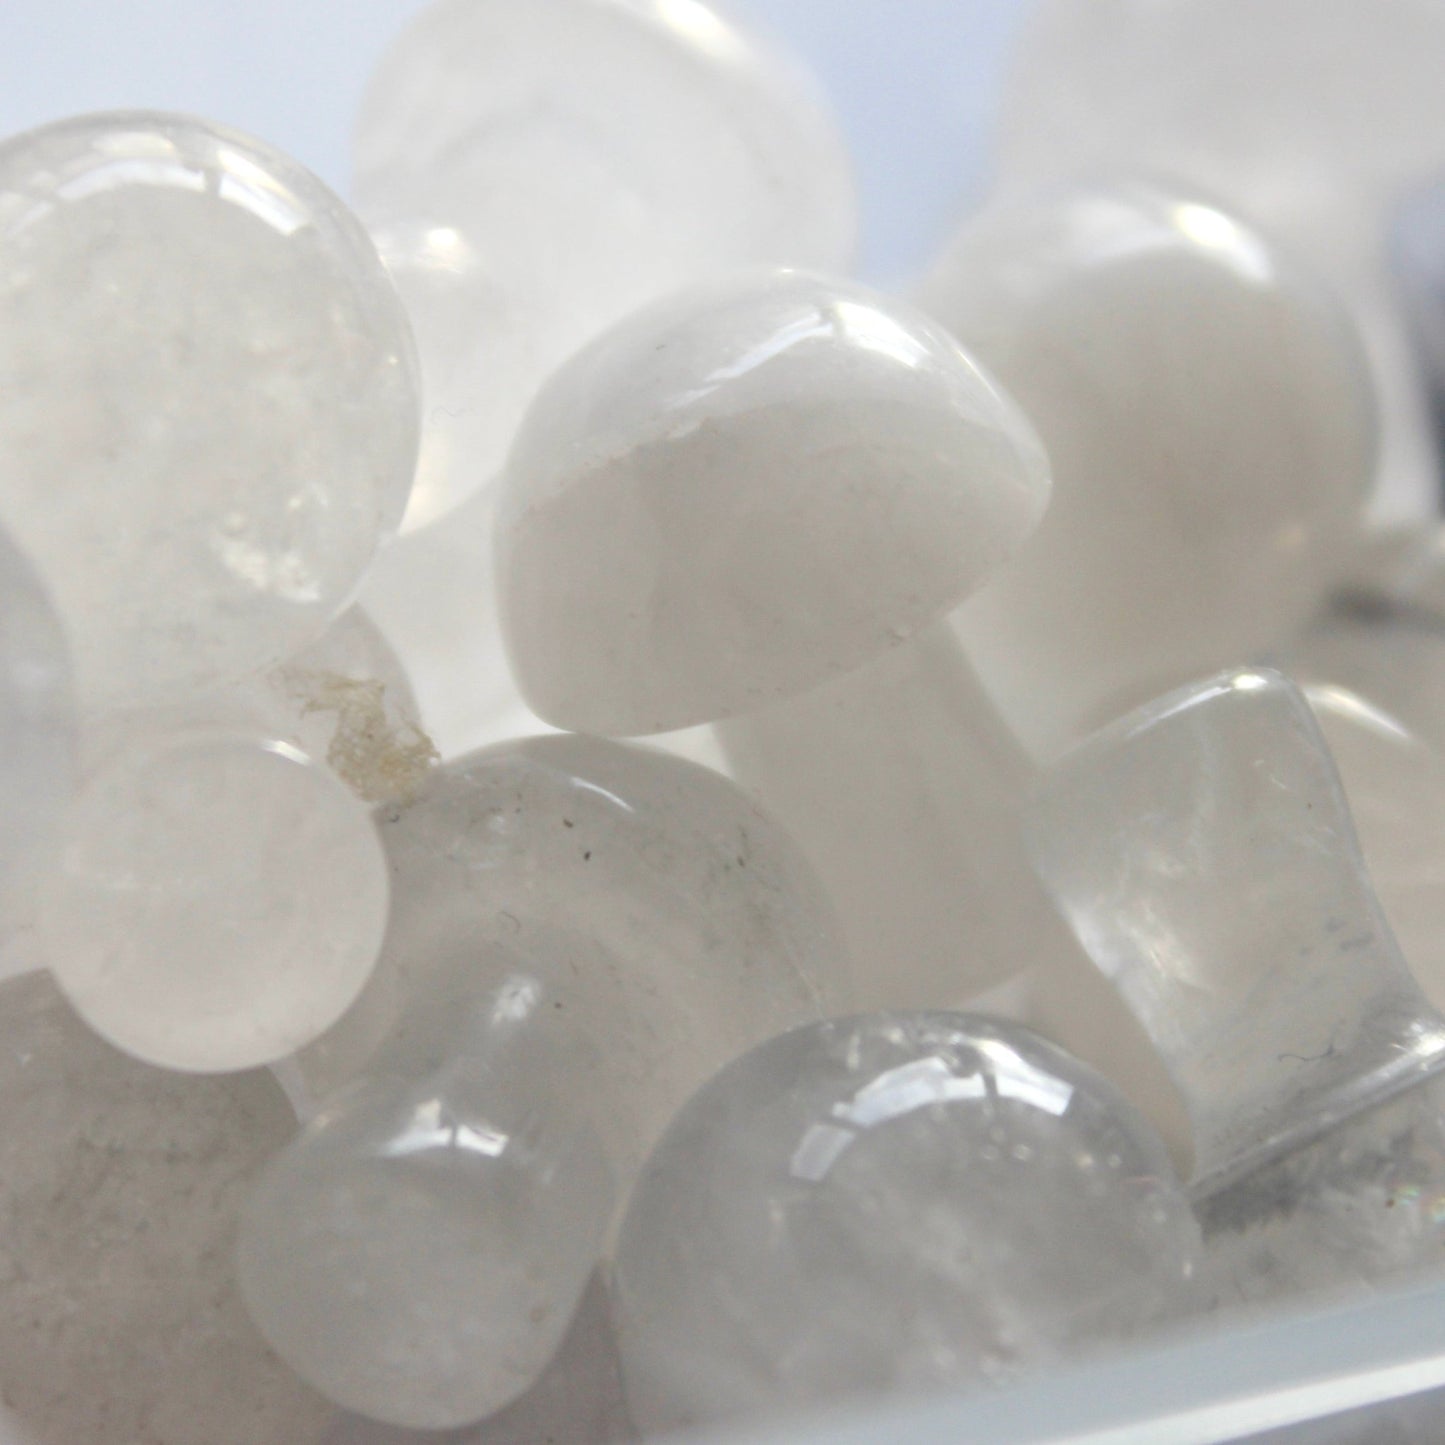 Clear Quartz Mushroom - Conscious Crystals New Zealand Crystal and Spiritual Shop